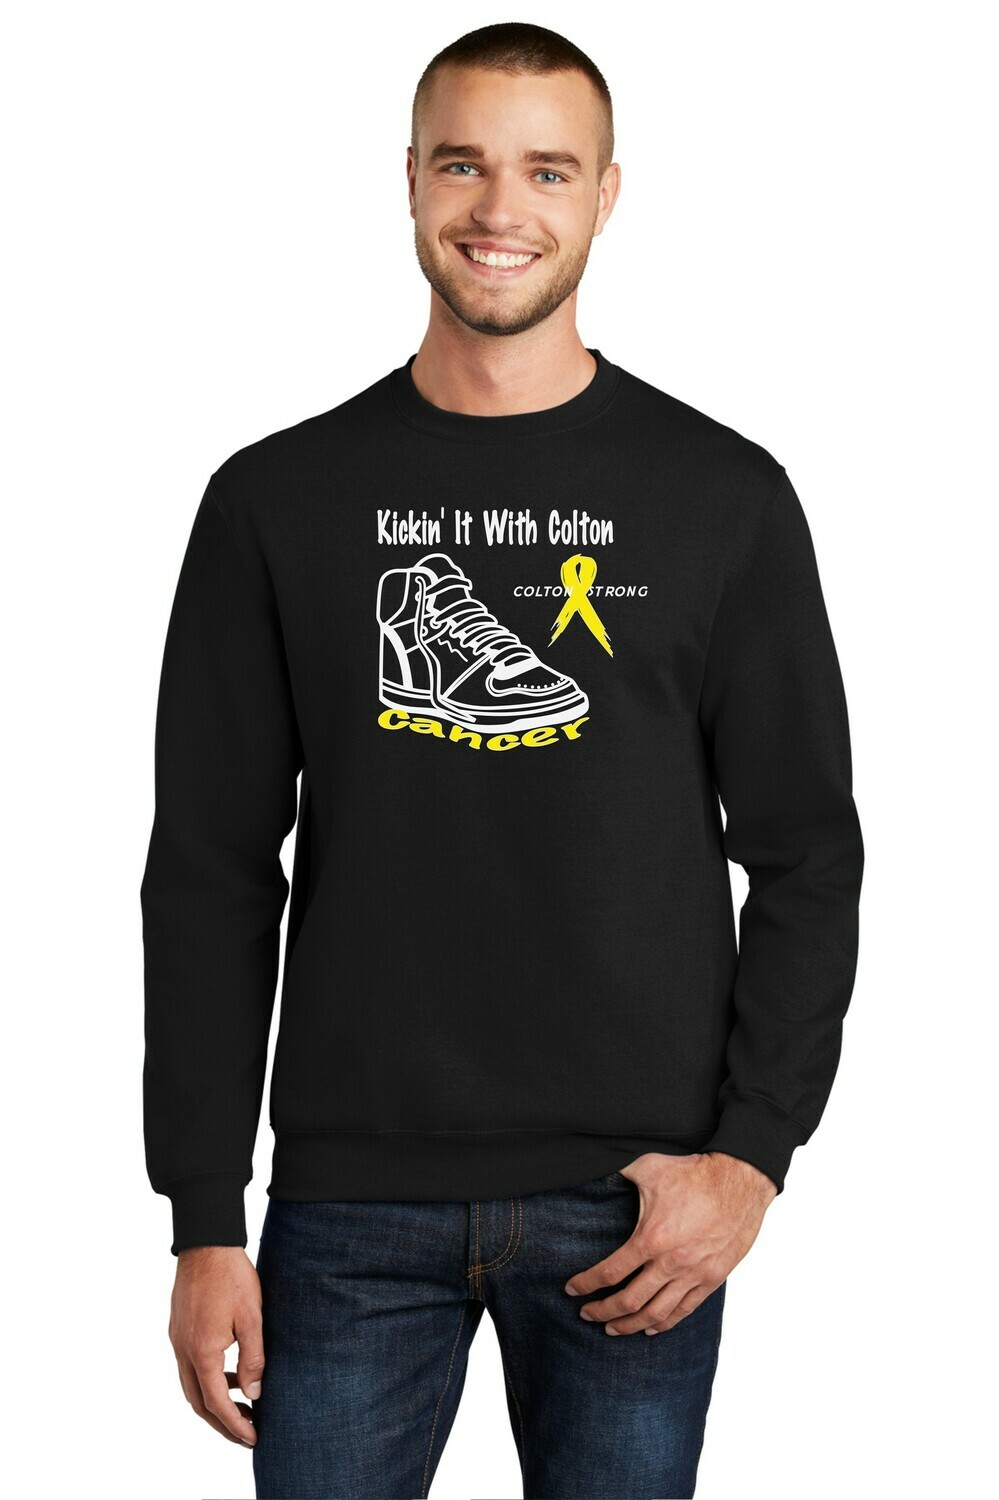 Kickin' It With Colton Crewneck Sweatshirt